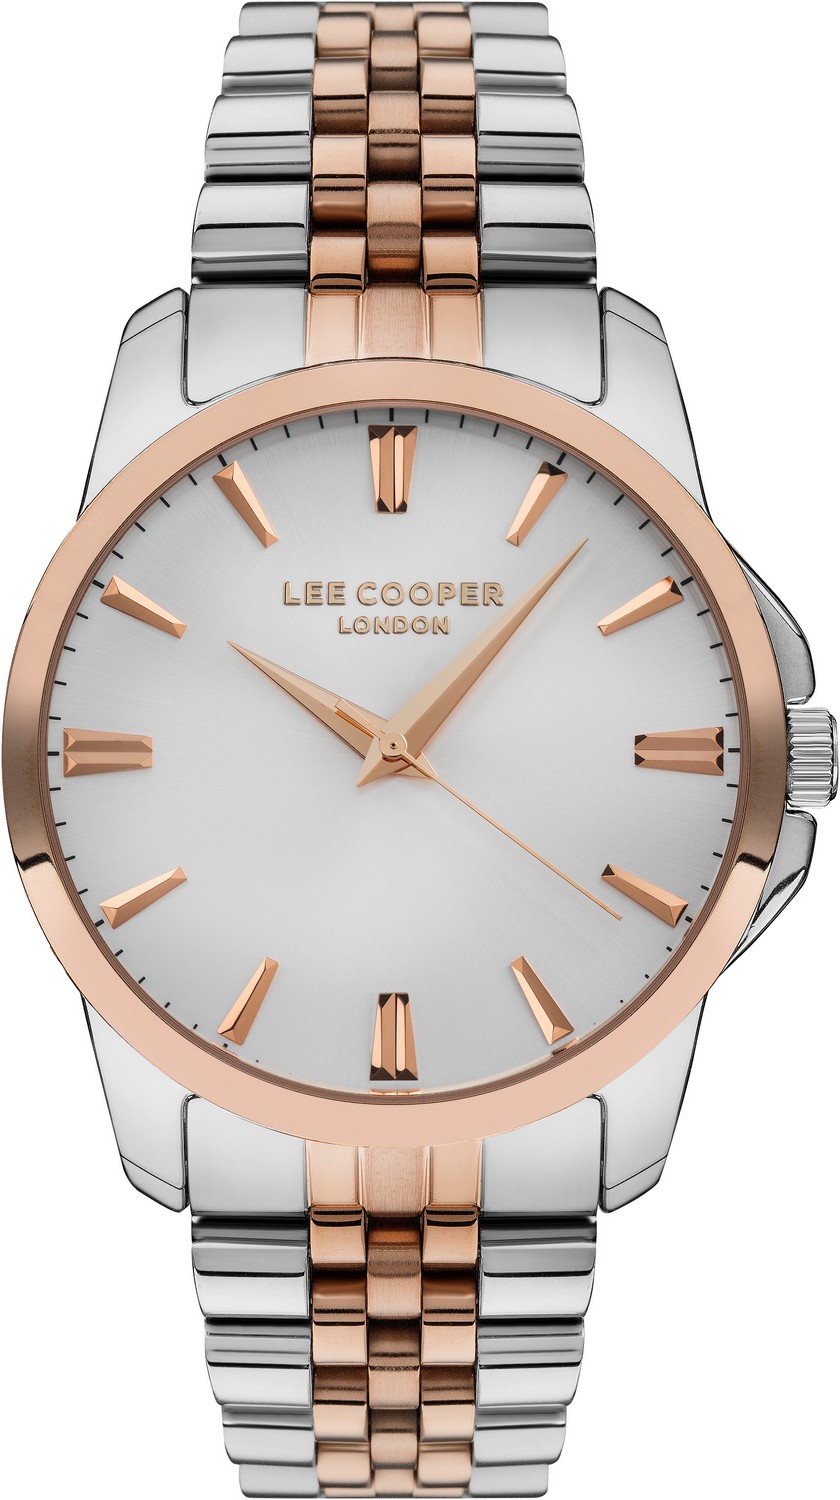 LEE COOPER  Мужские часы, кварцевый механизм, суперметалл с покрытием, 42 мм